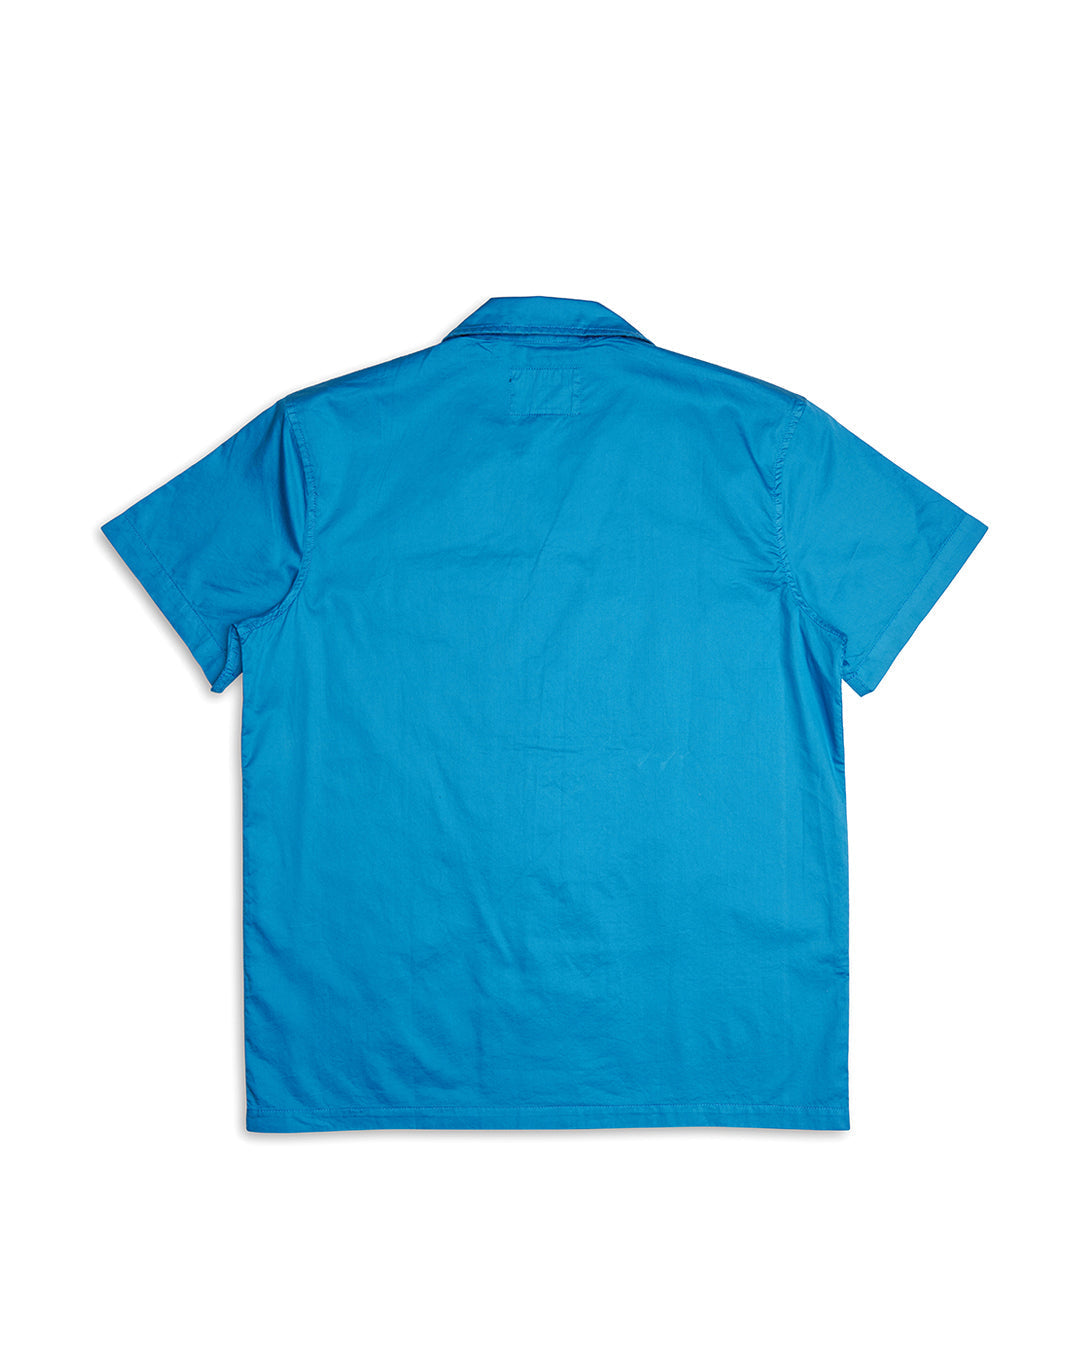 Foreman Shirt French Blue